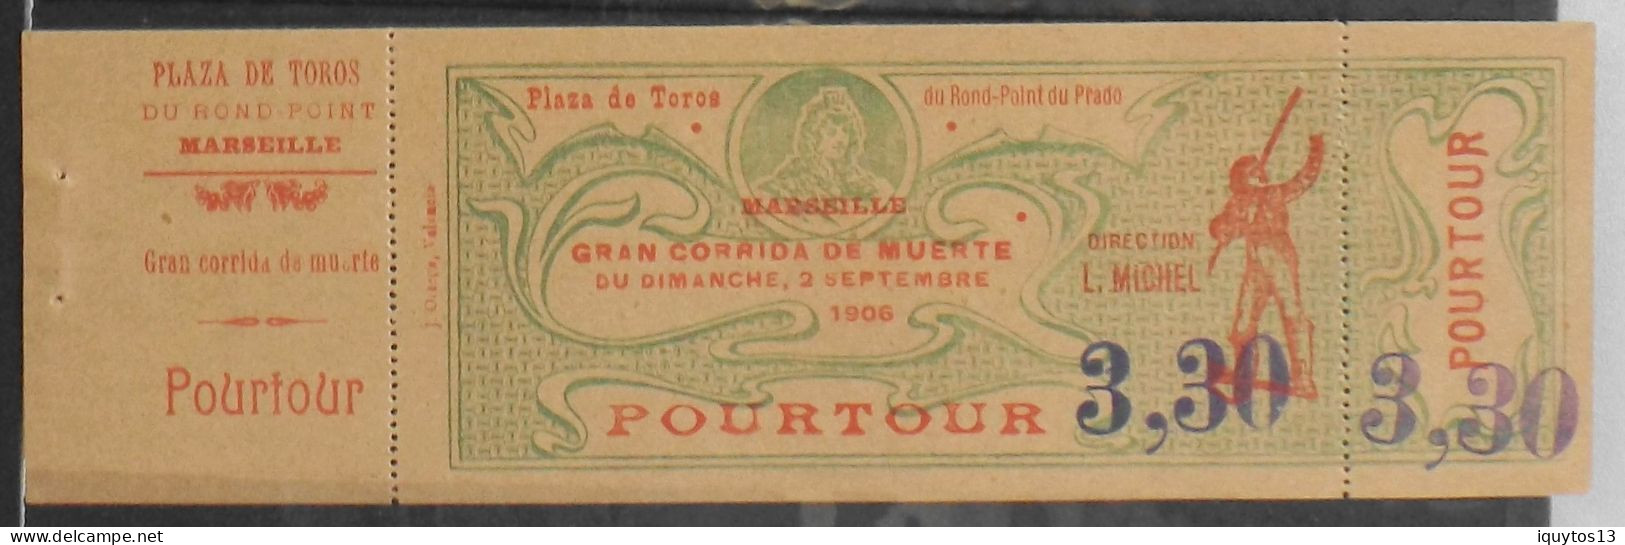 POURTOUR > Marseille Gran Corrida De Muerte Le 2.9.1906 - Plaza De Toros Du Rond Point Prado - Dir. L. MICHEL - TBE - Eintrittskarten